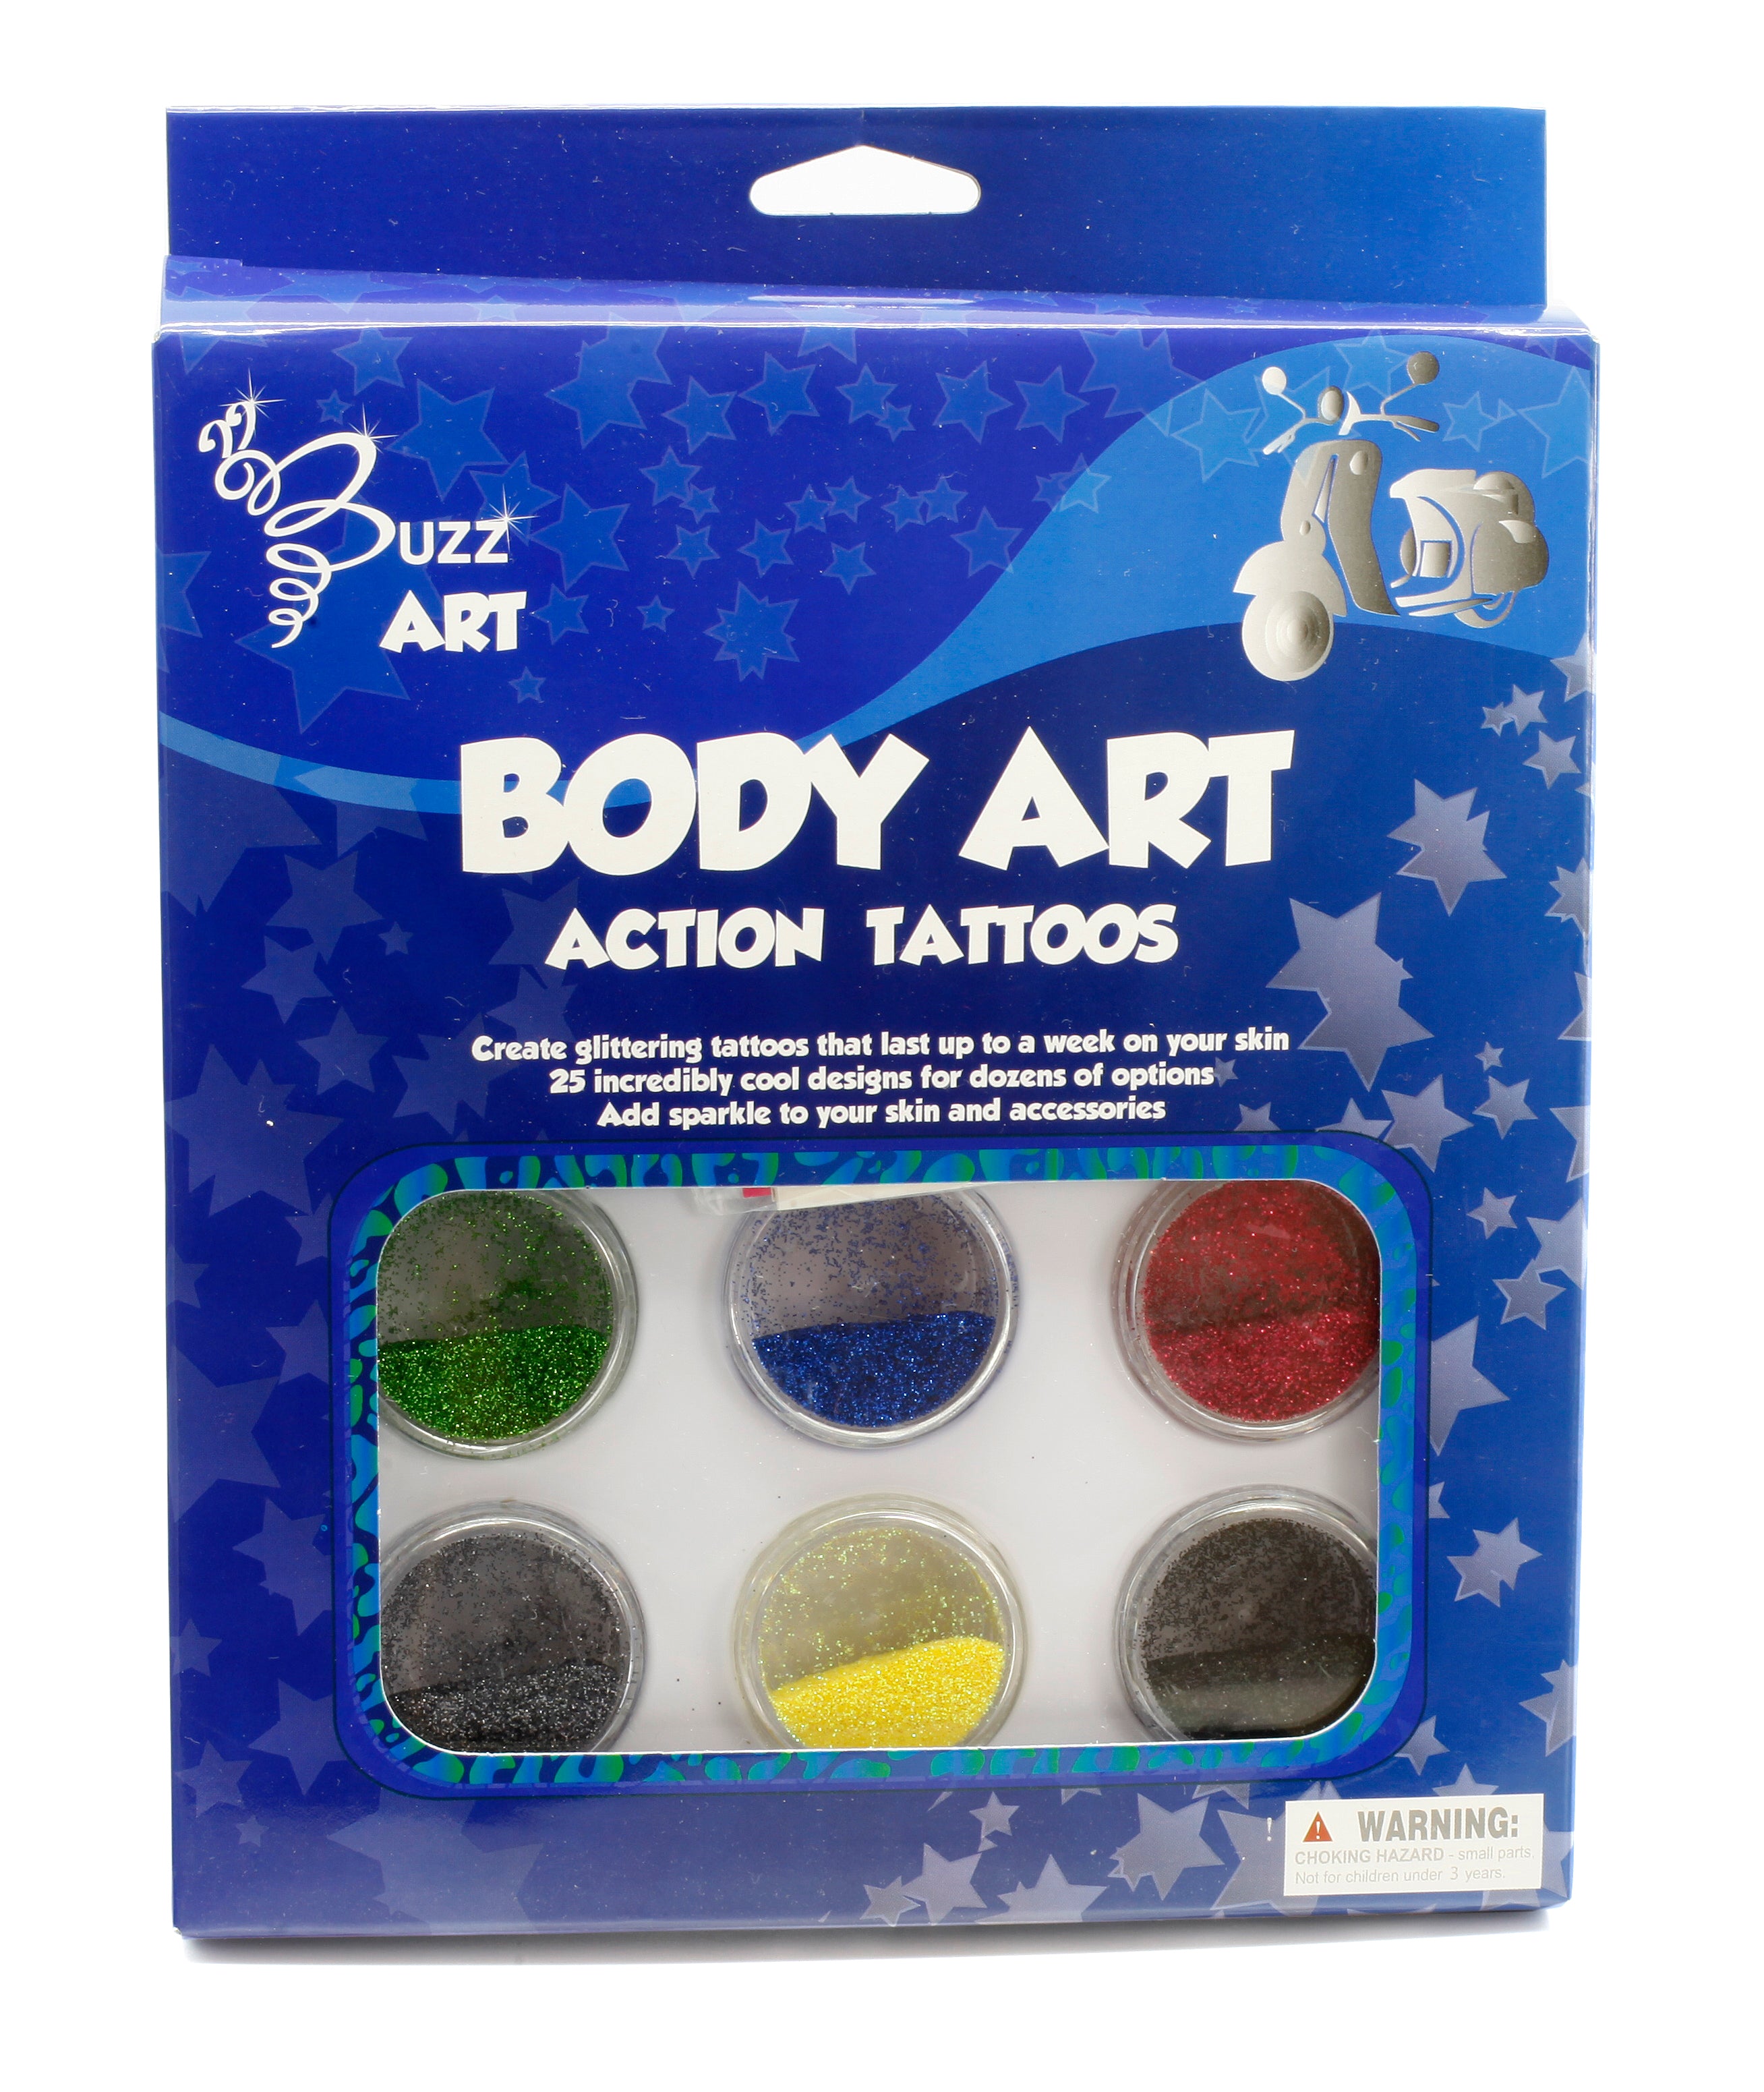 Body Art Tattoos - Action